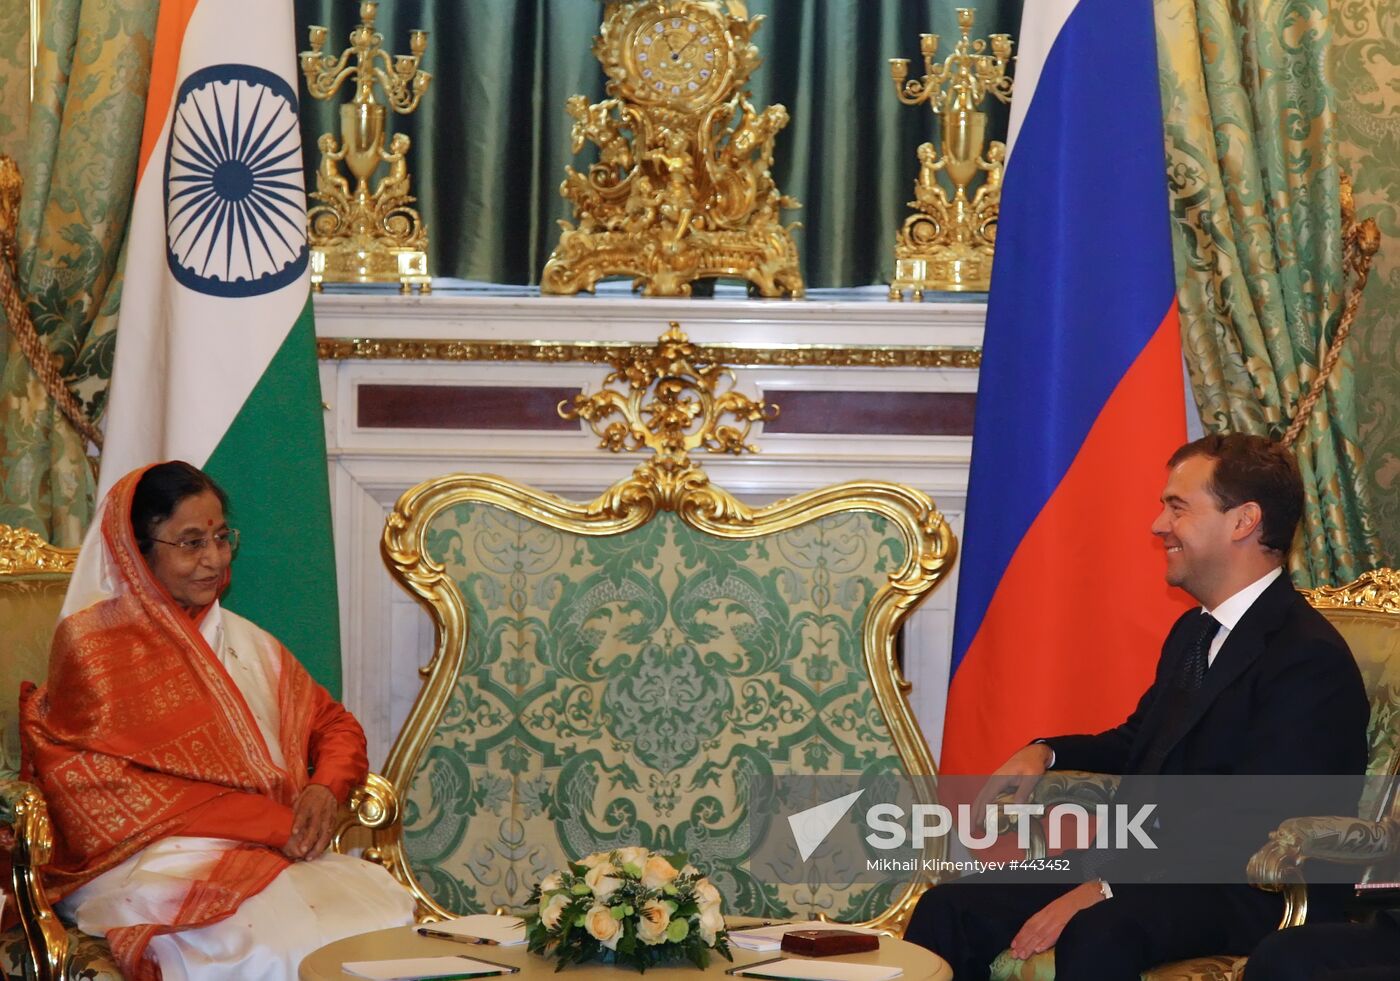 Dmitry Medvedev and Pratibha Devisingh Patil